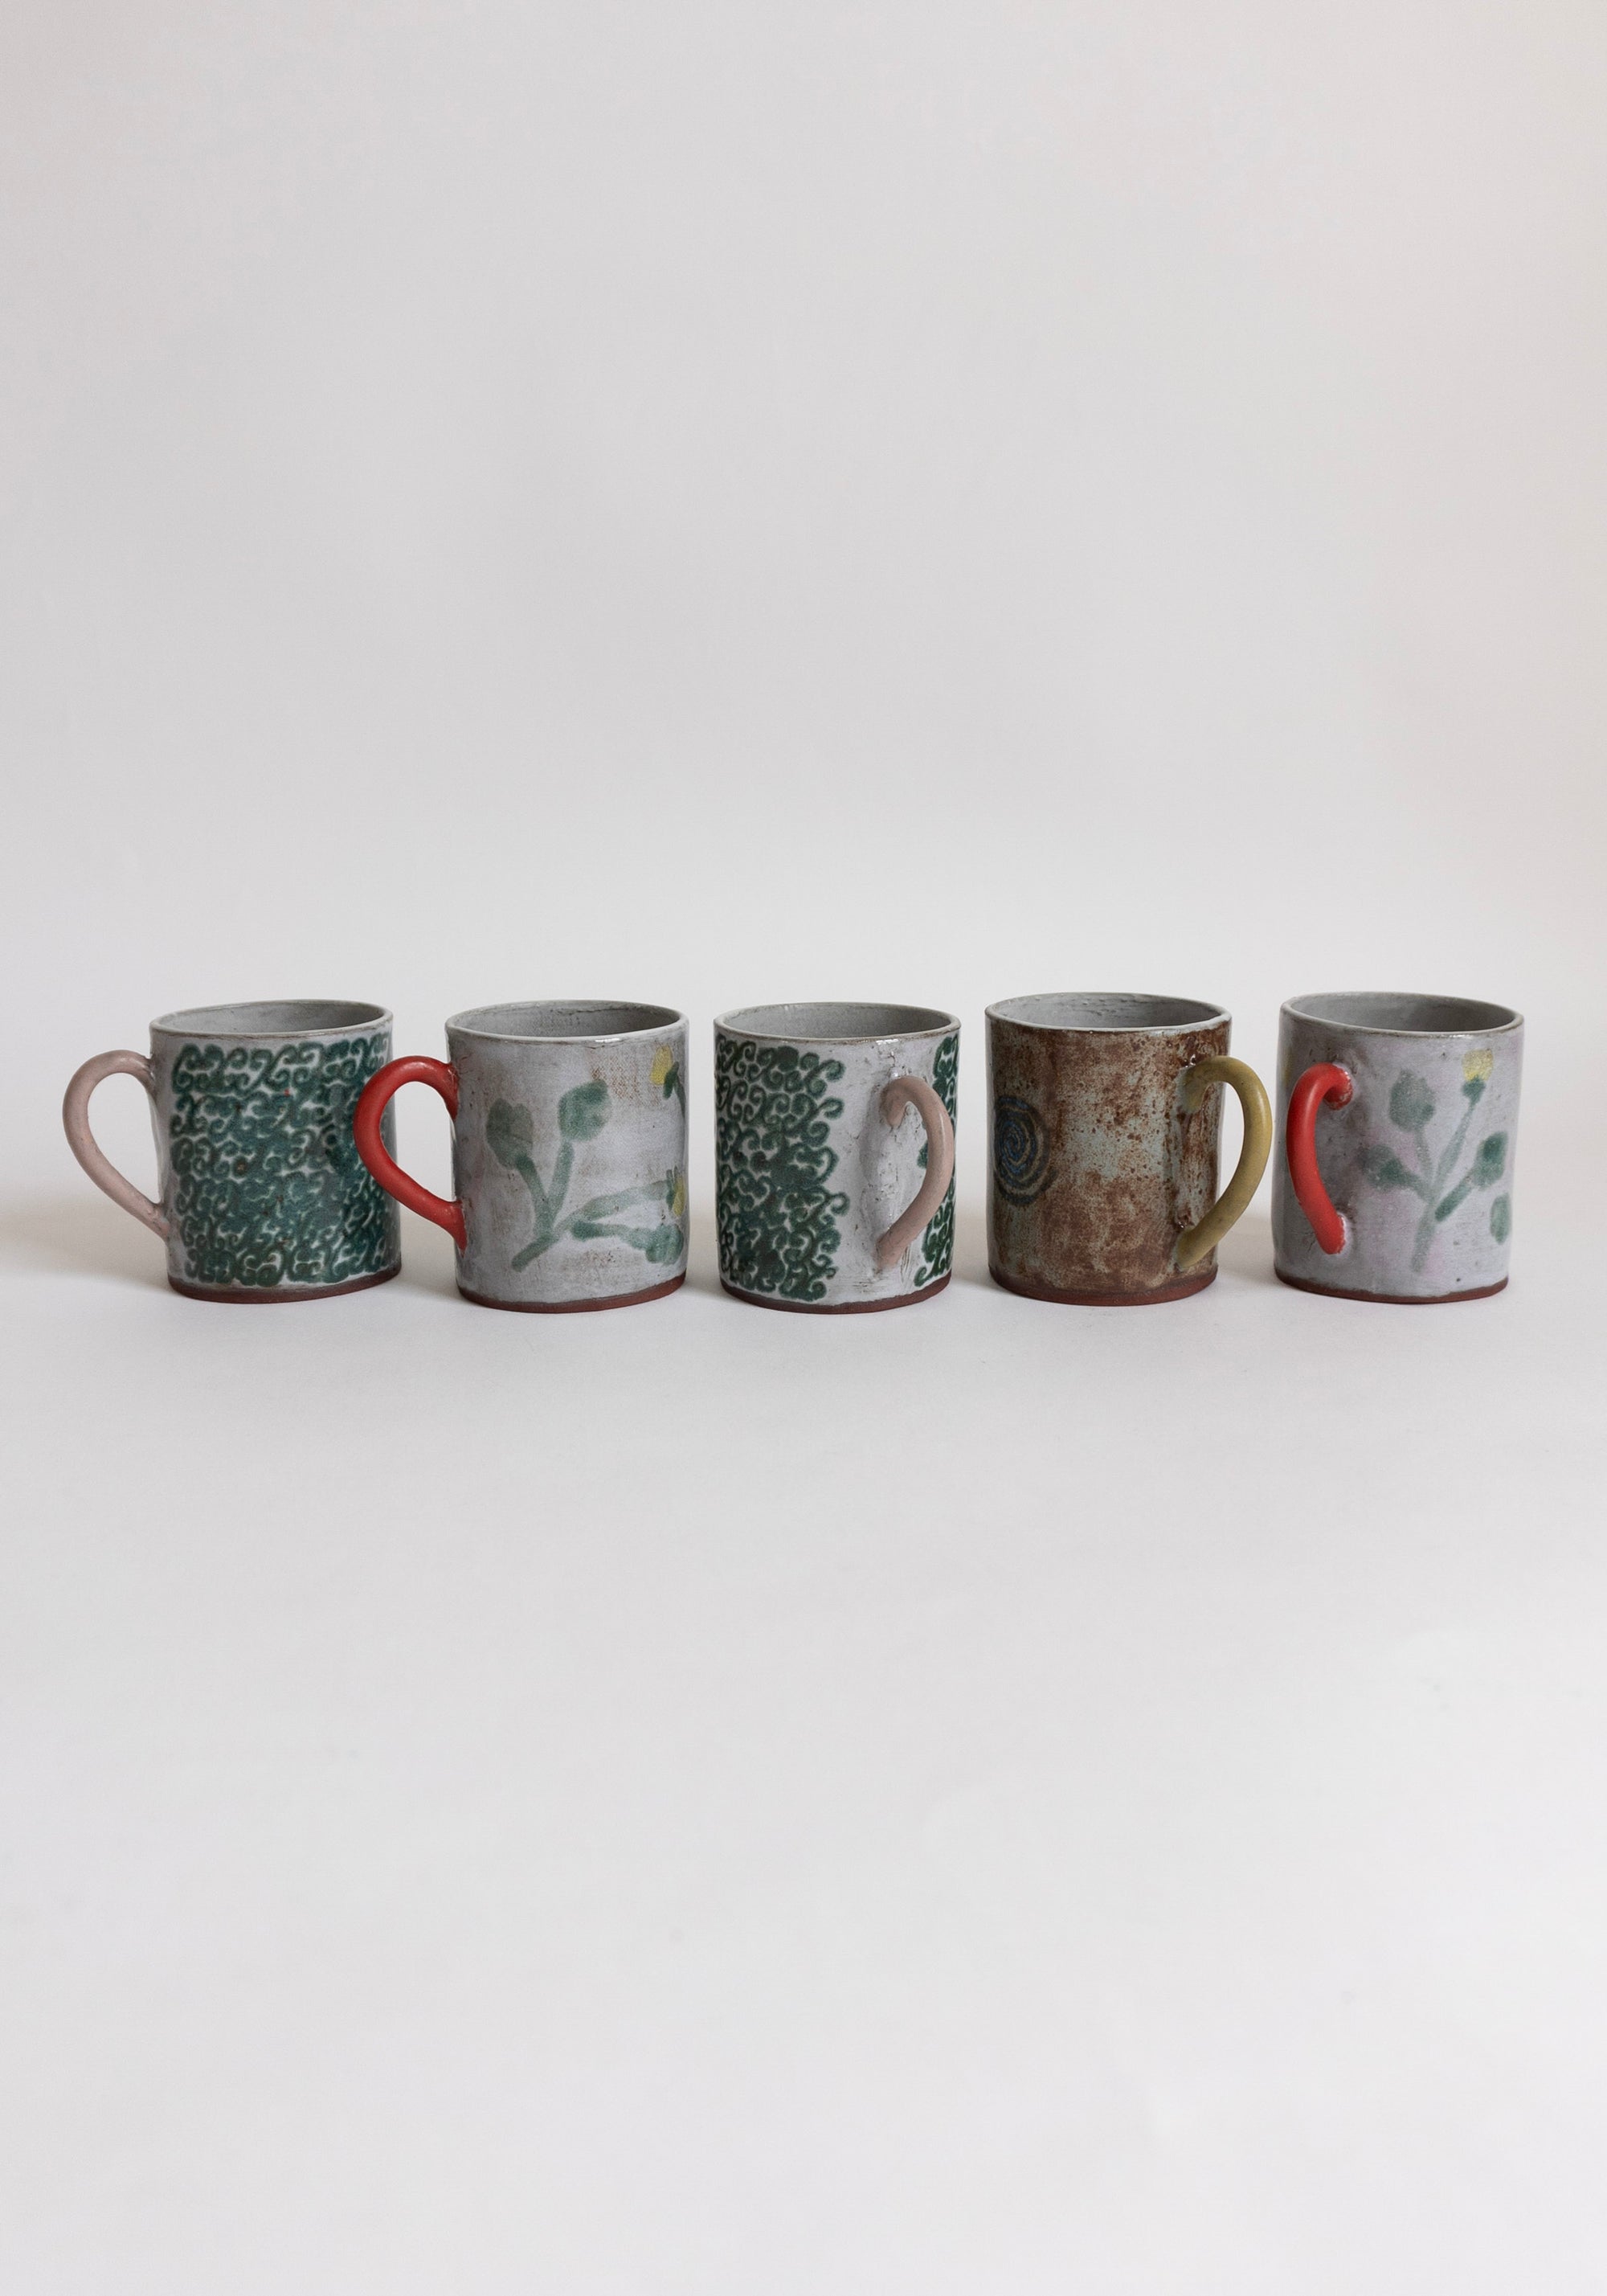 Shiela Laufer Hand Built Ceramic Cup